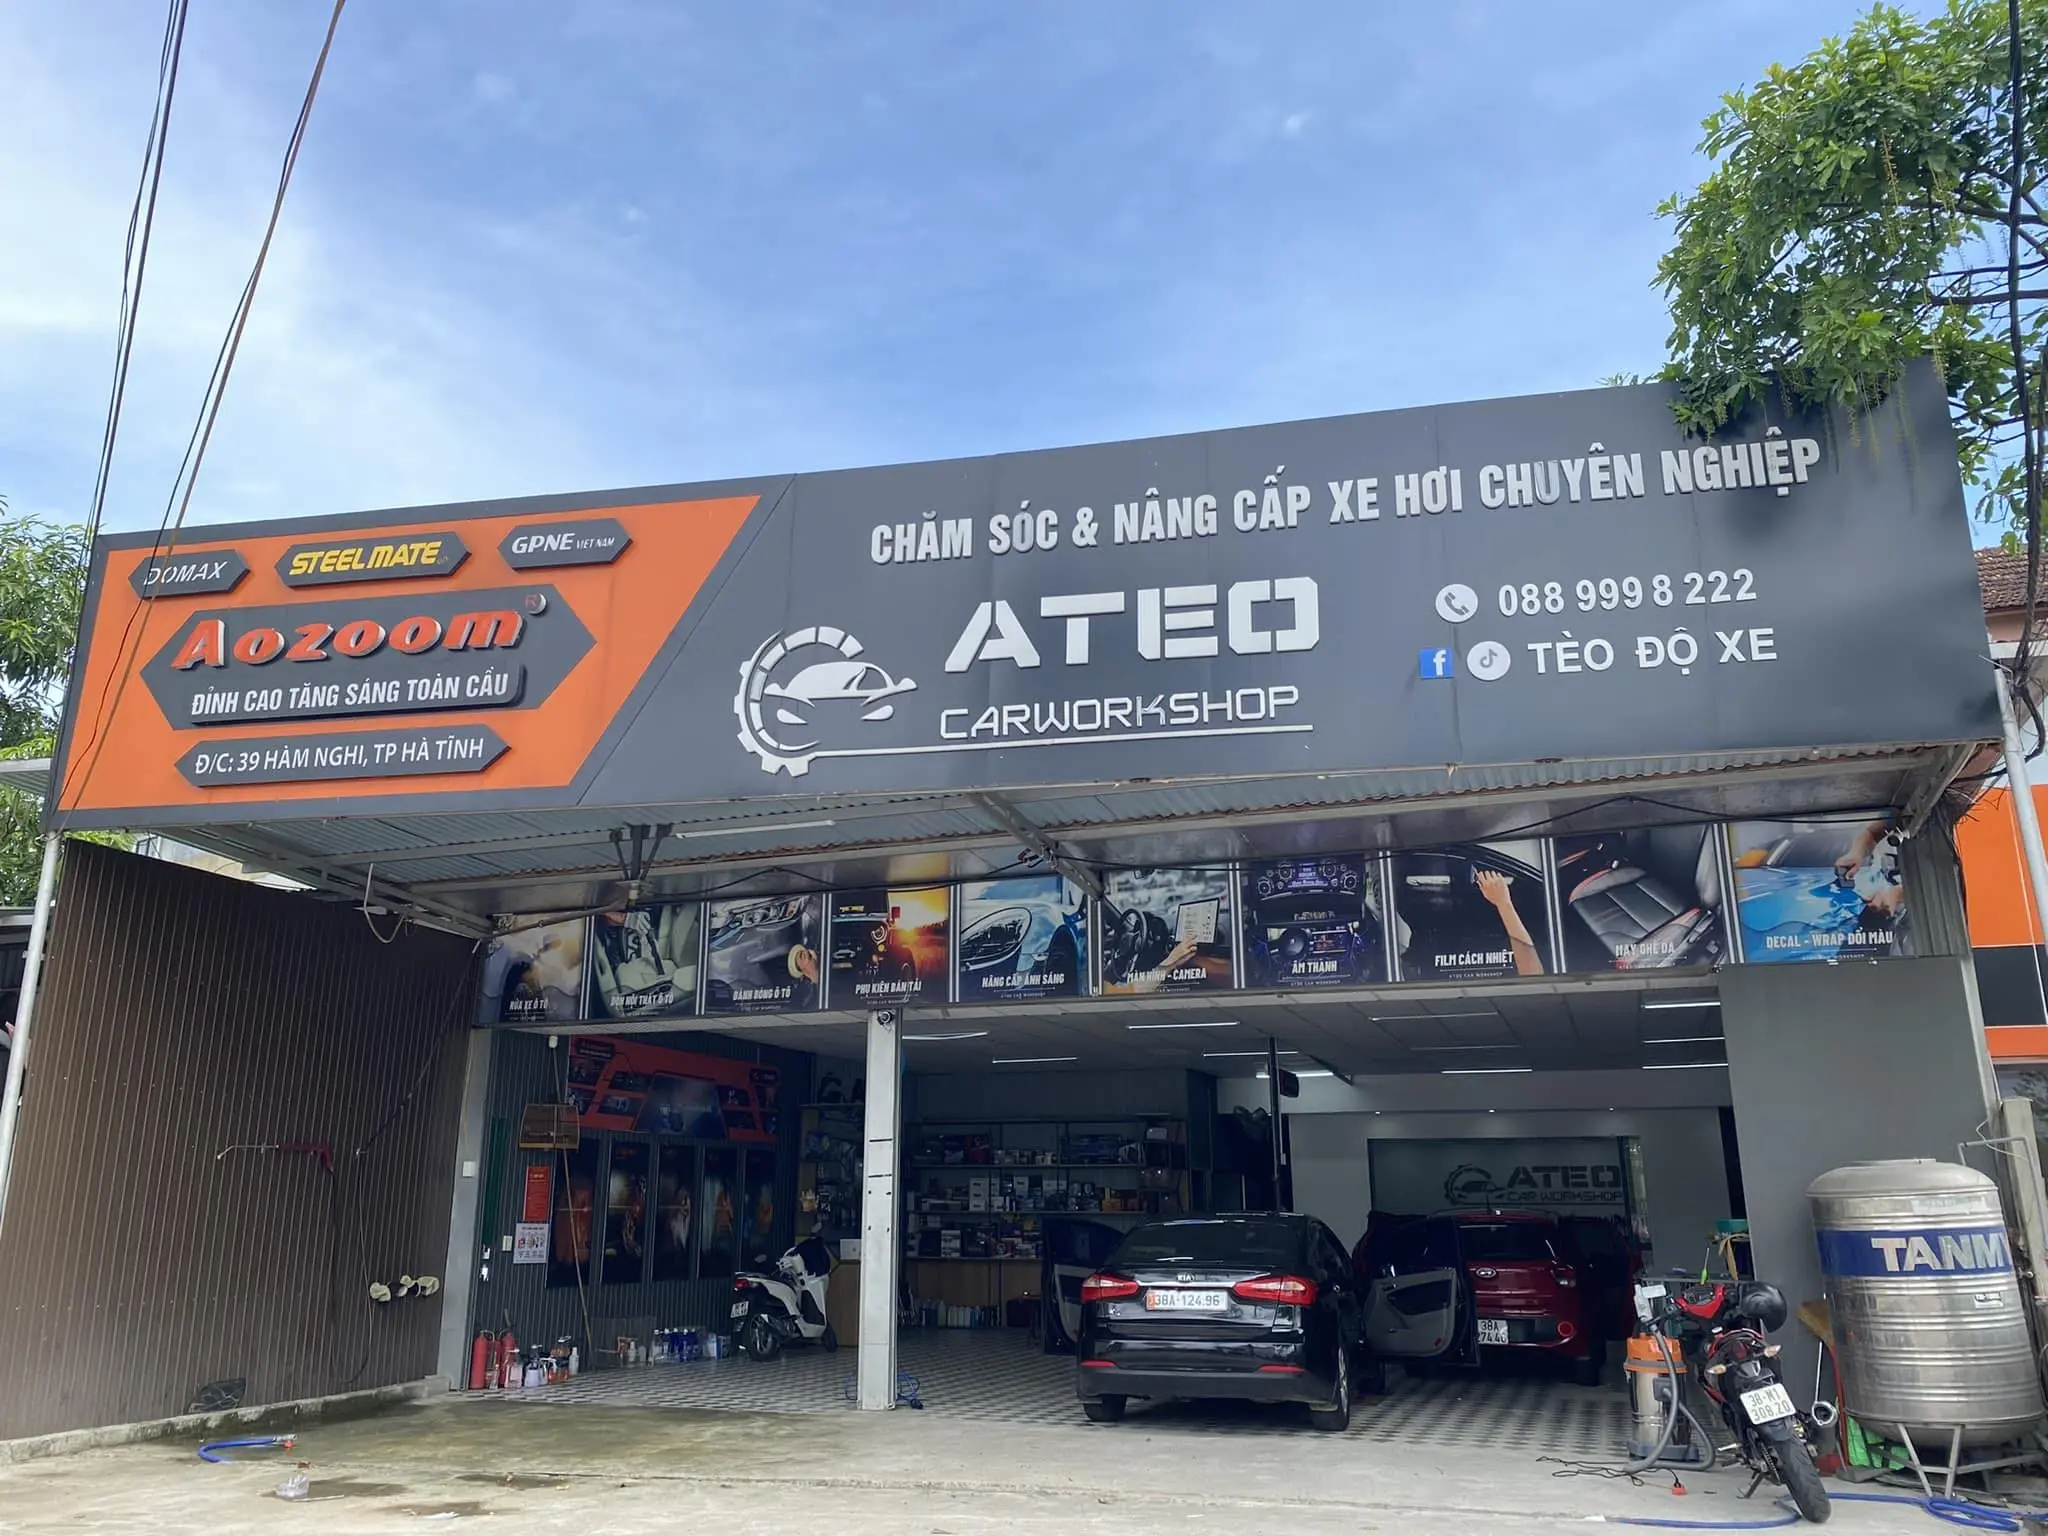  ATEO Car Work Shop